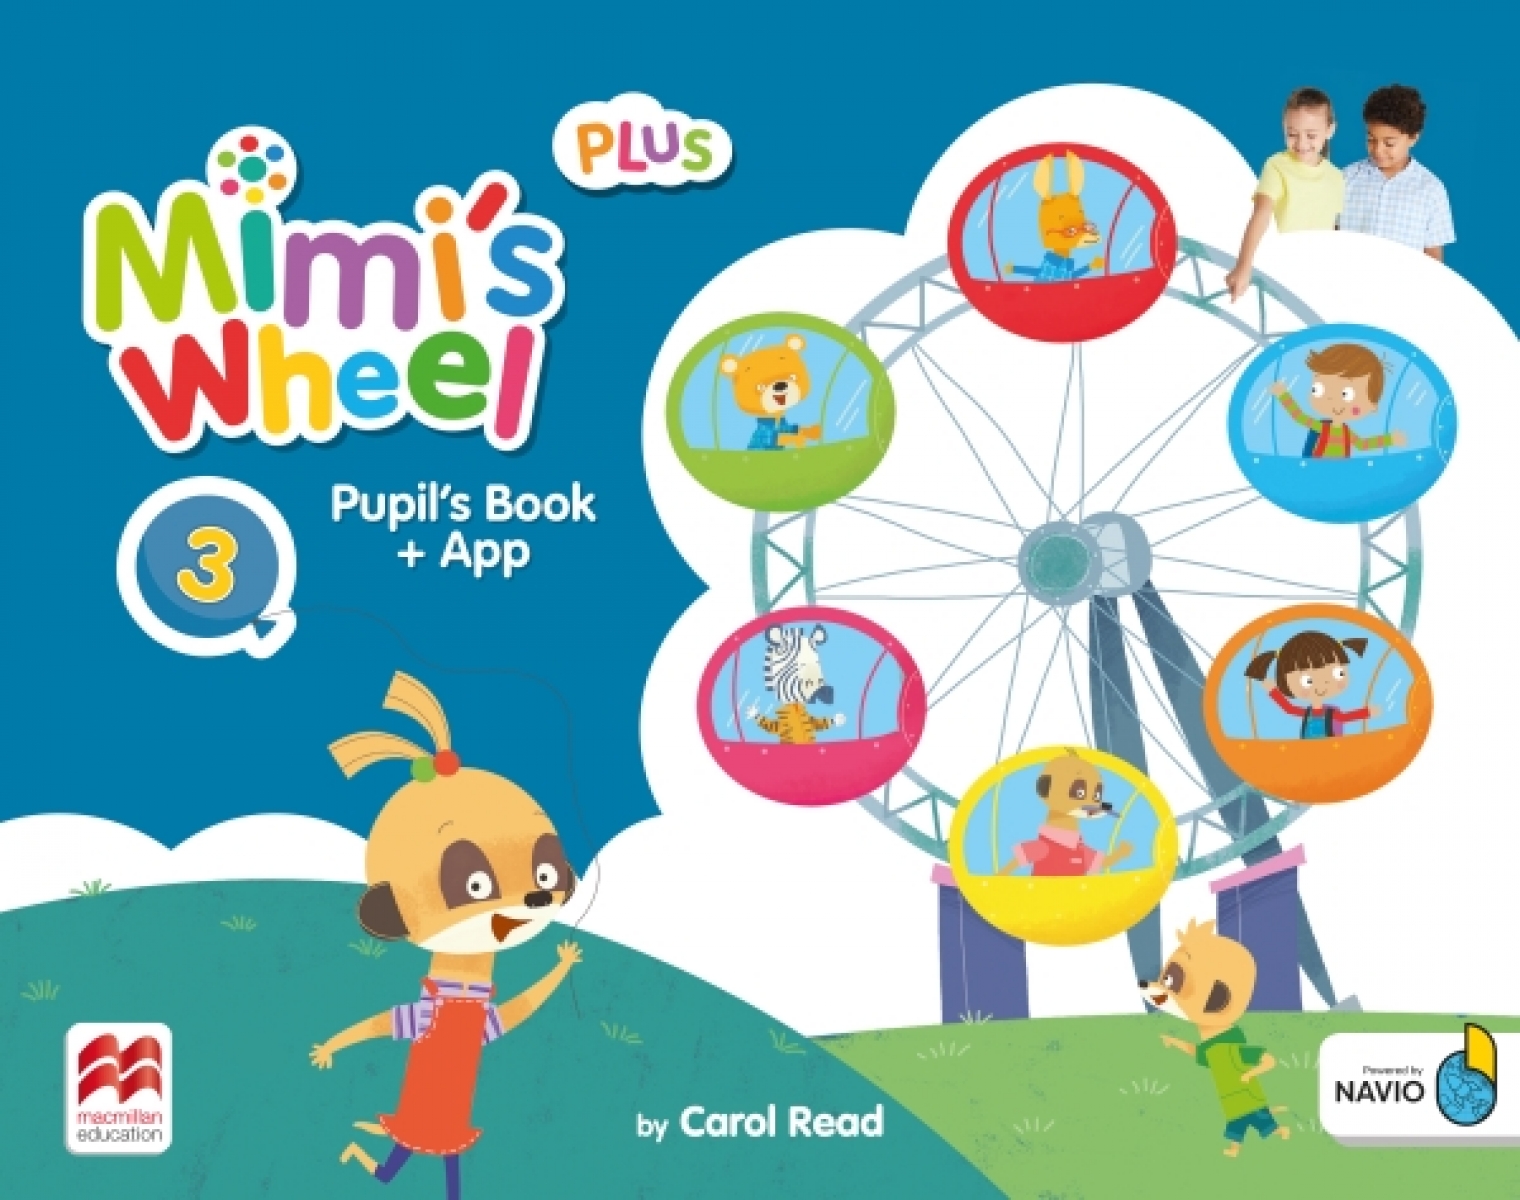 Read Carol Mimi's Wheel Level 3 Pupil's Book Plus with Navio App 